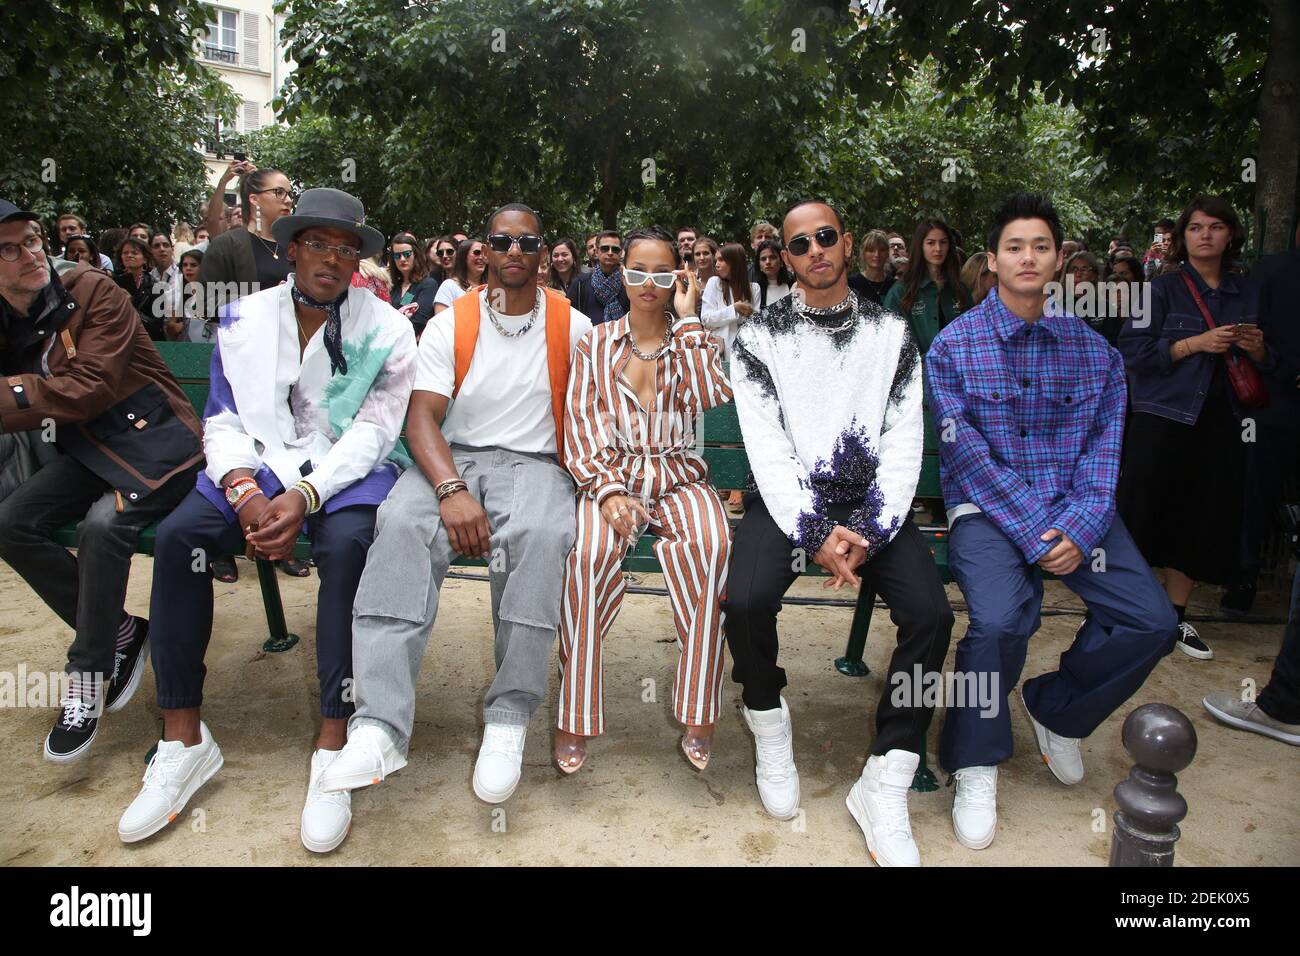 Louis Vuitton SS20 Paris Fashion Week Men's Show